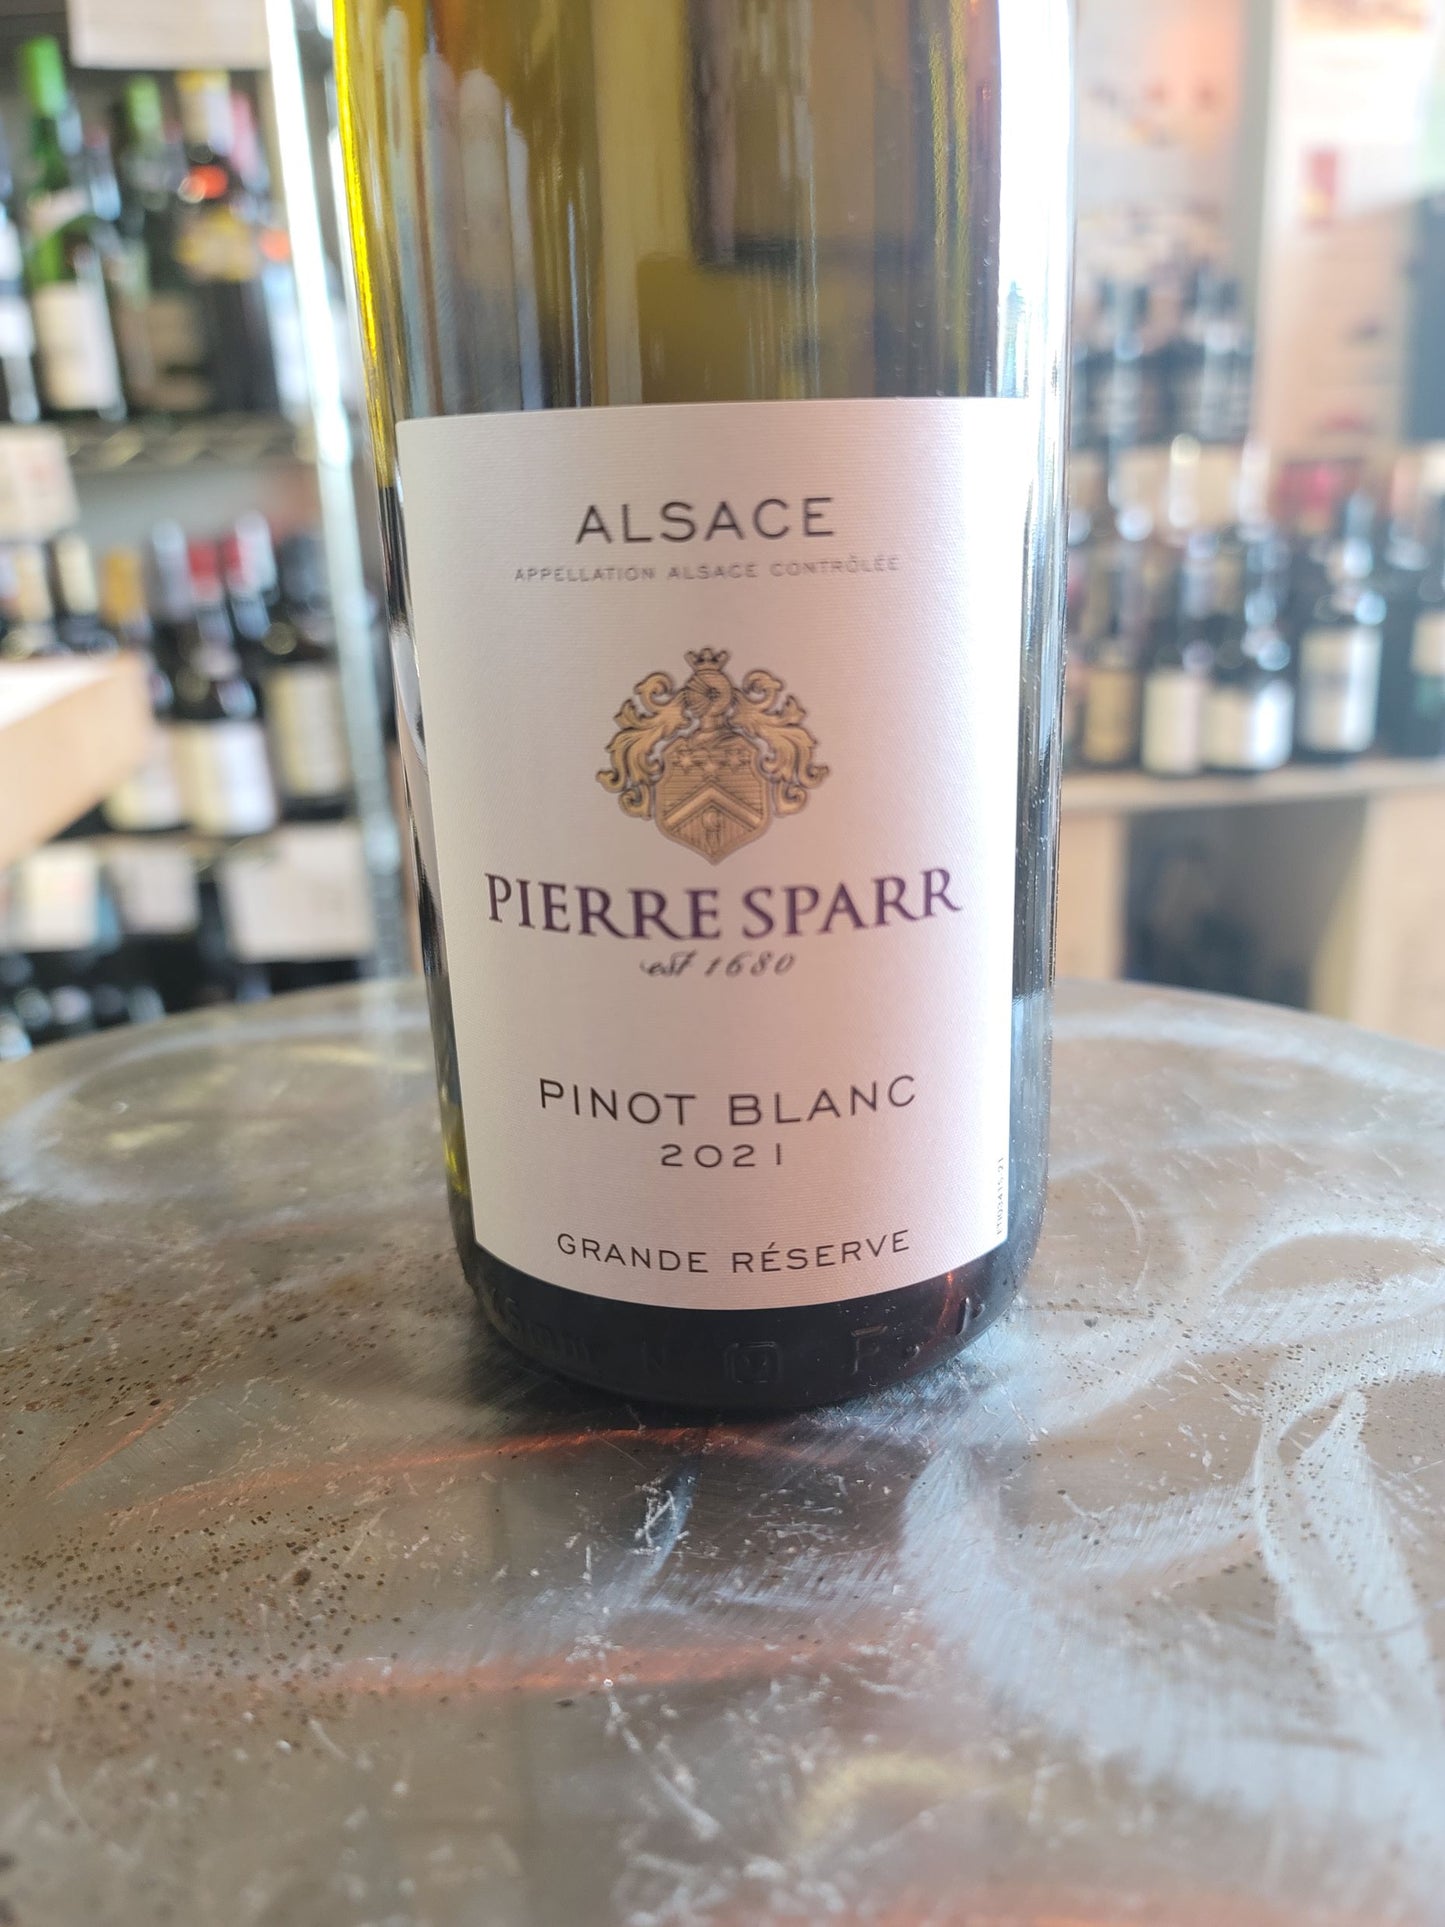 PIERRE SPARR 2021 Pinot Blanc 'Grande Reserve' (Alsace, France)